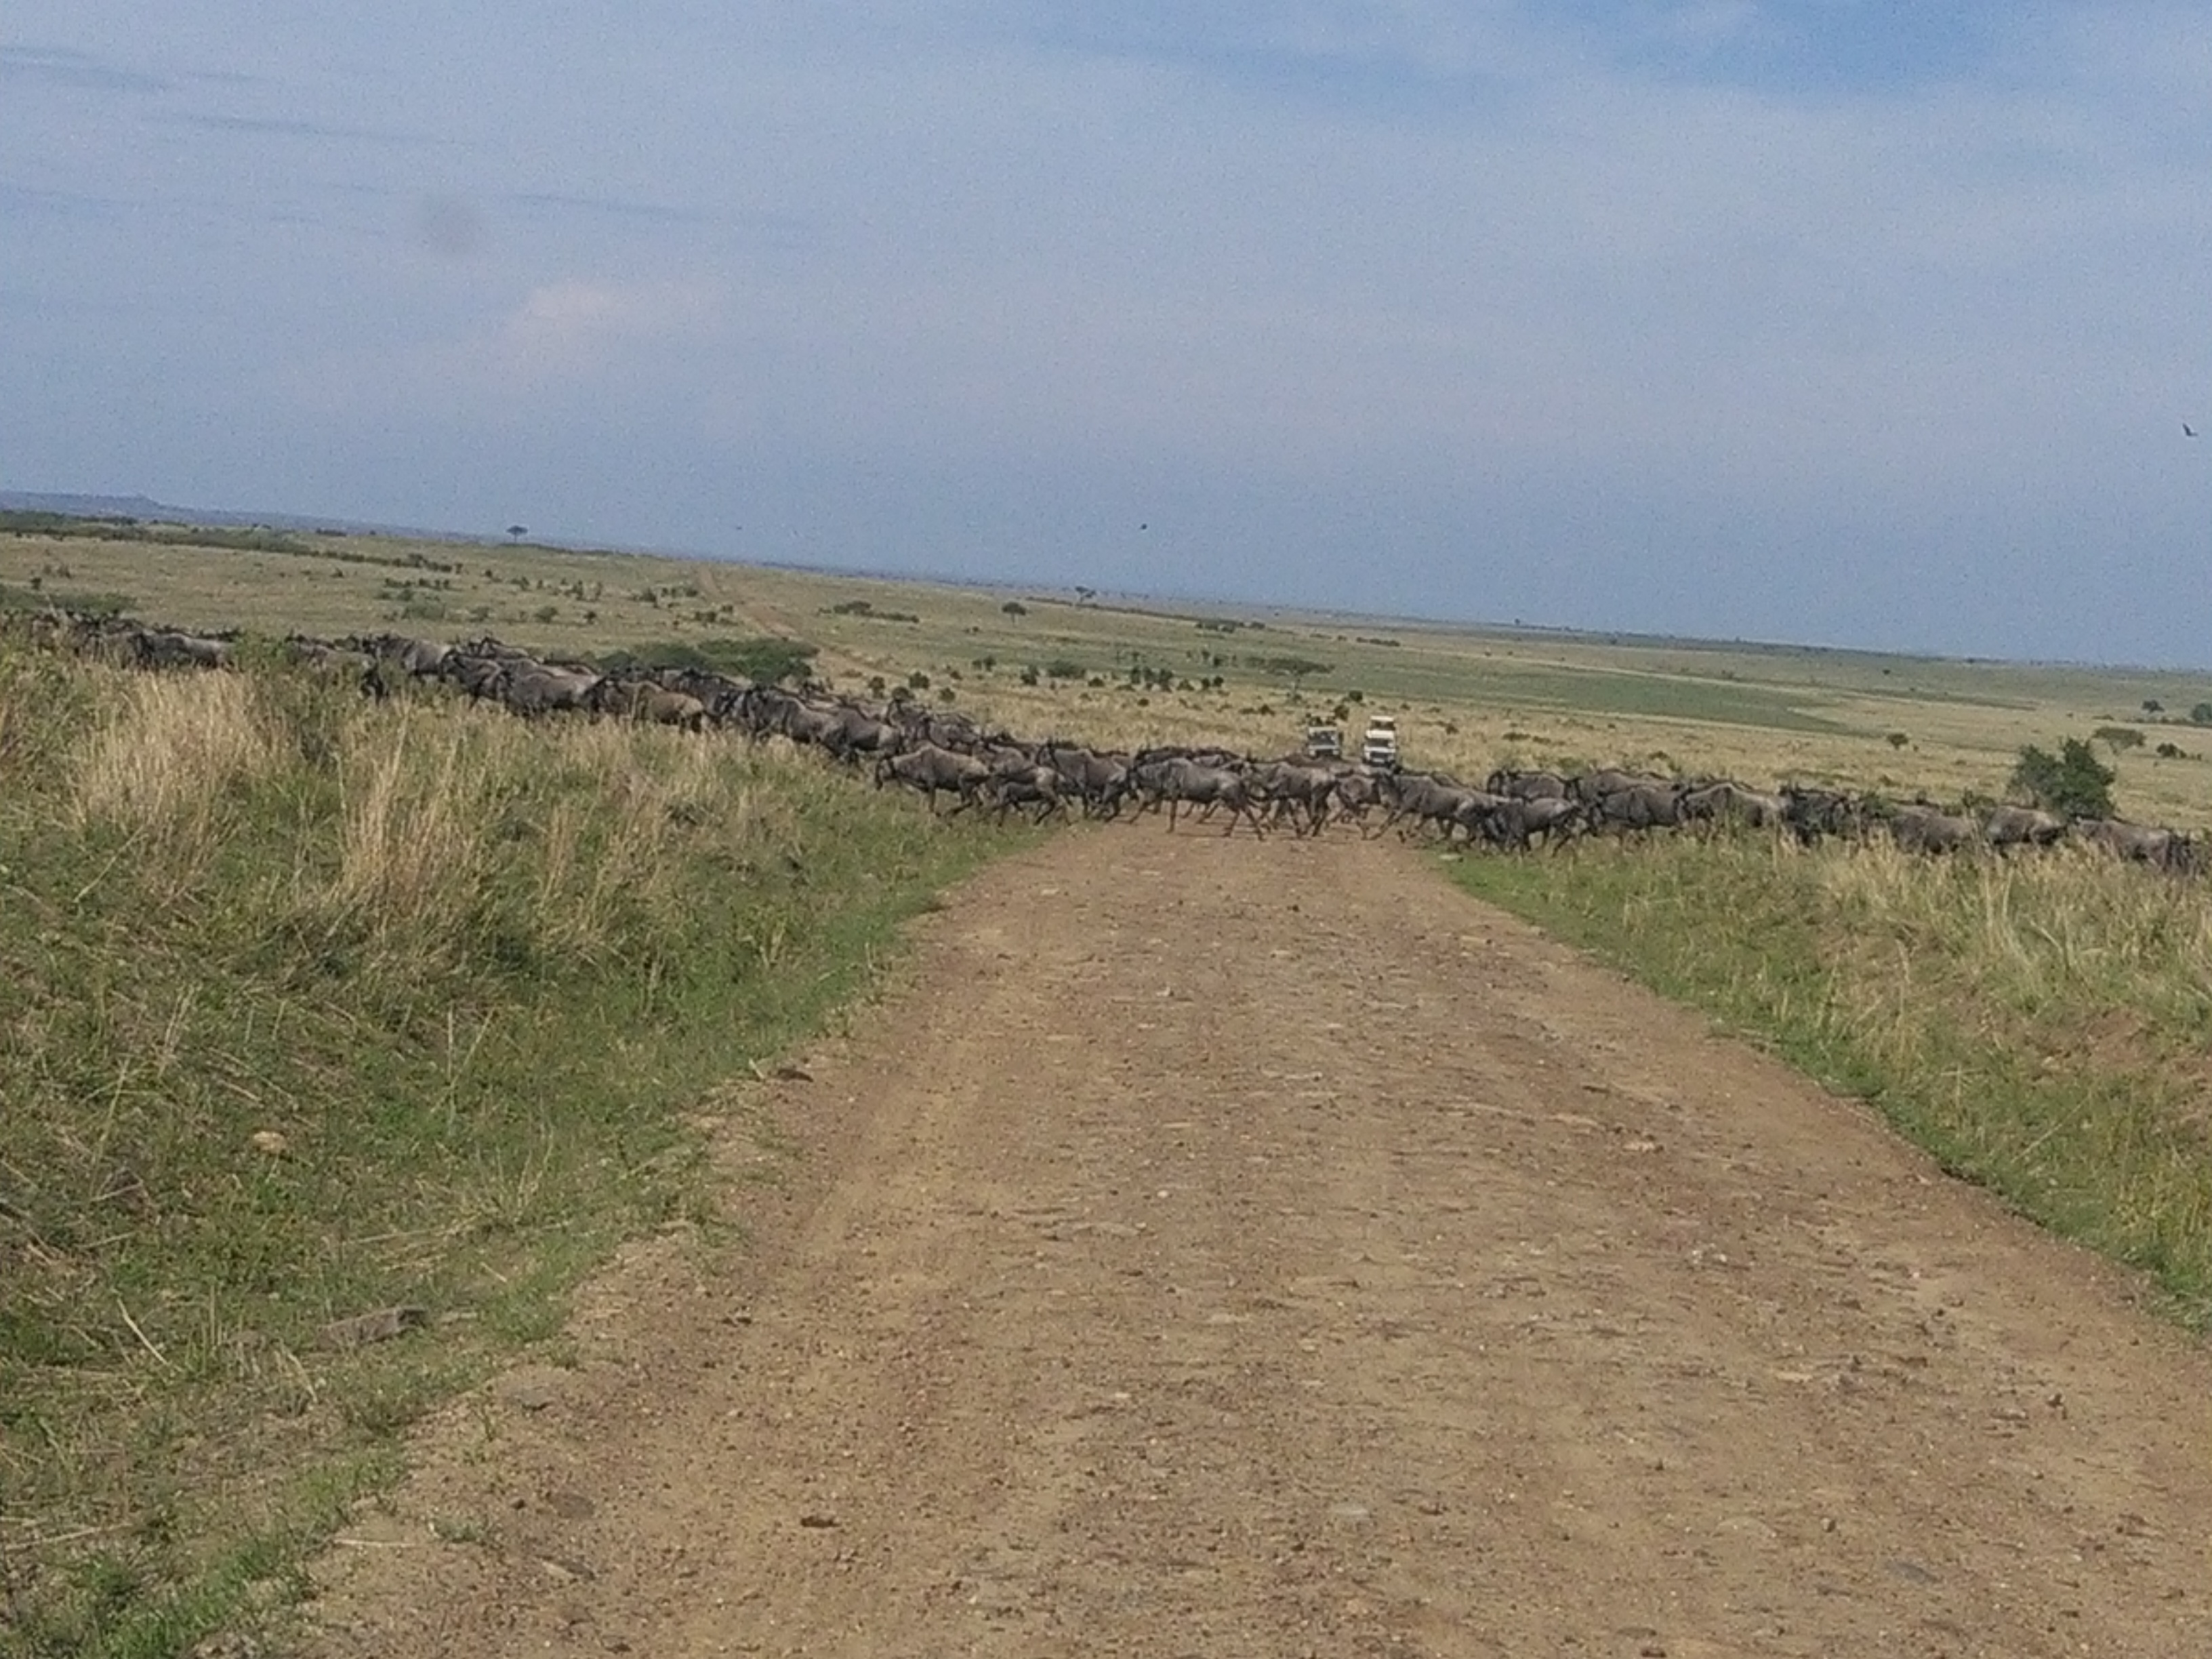 Kenya Wildebeest Migration Safari, YHA Kenya Travel Package